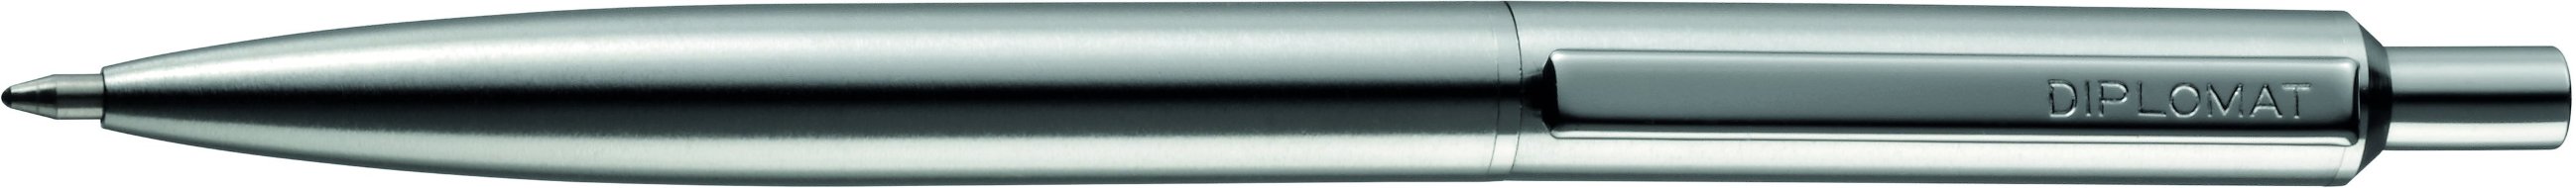 Шариковая ручка Diplomat Magnum Equipment Stainless Steel